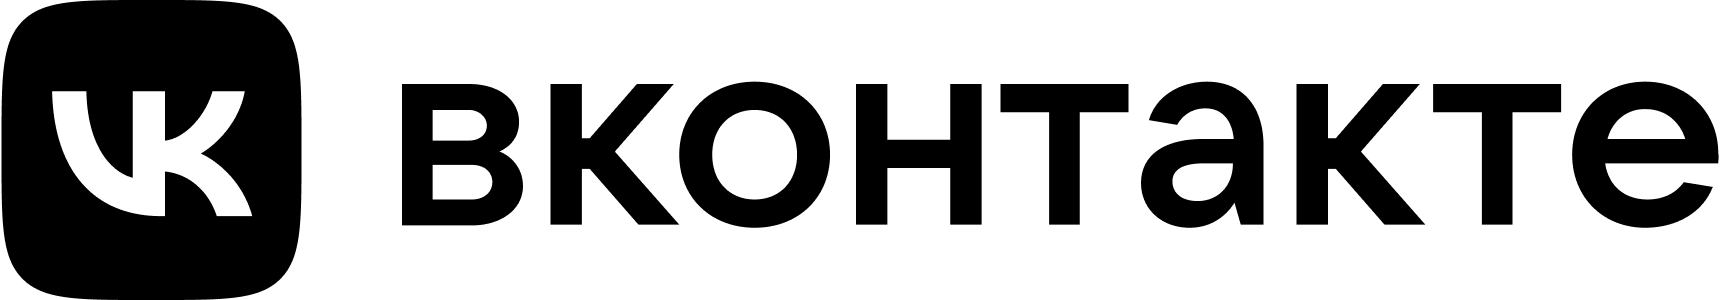 VK Text Logo Black&white